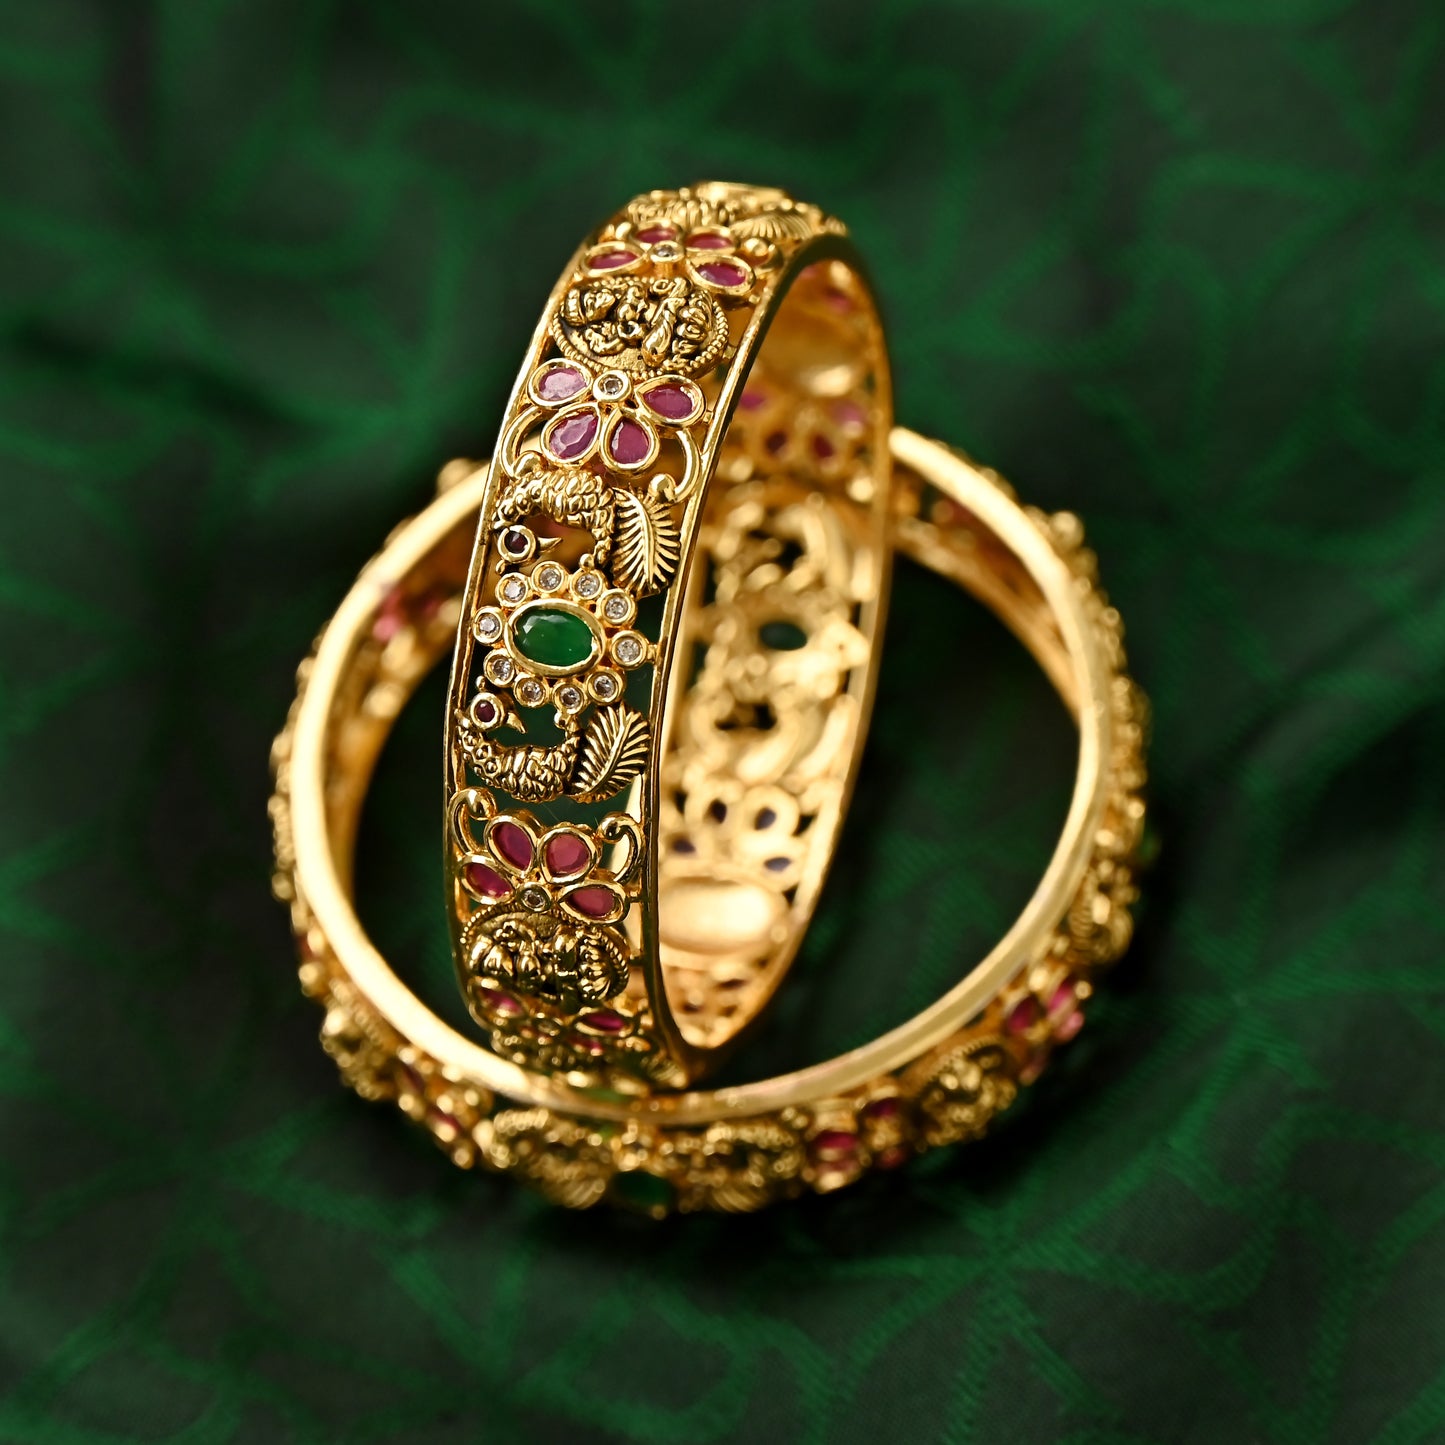 Antique Gold Mayuri Lakshmi AD Thick Bridal Bangles - Traditional and Elegant - Size: 2.4